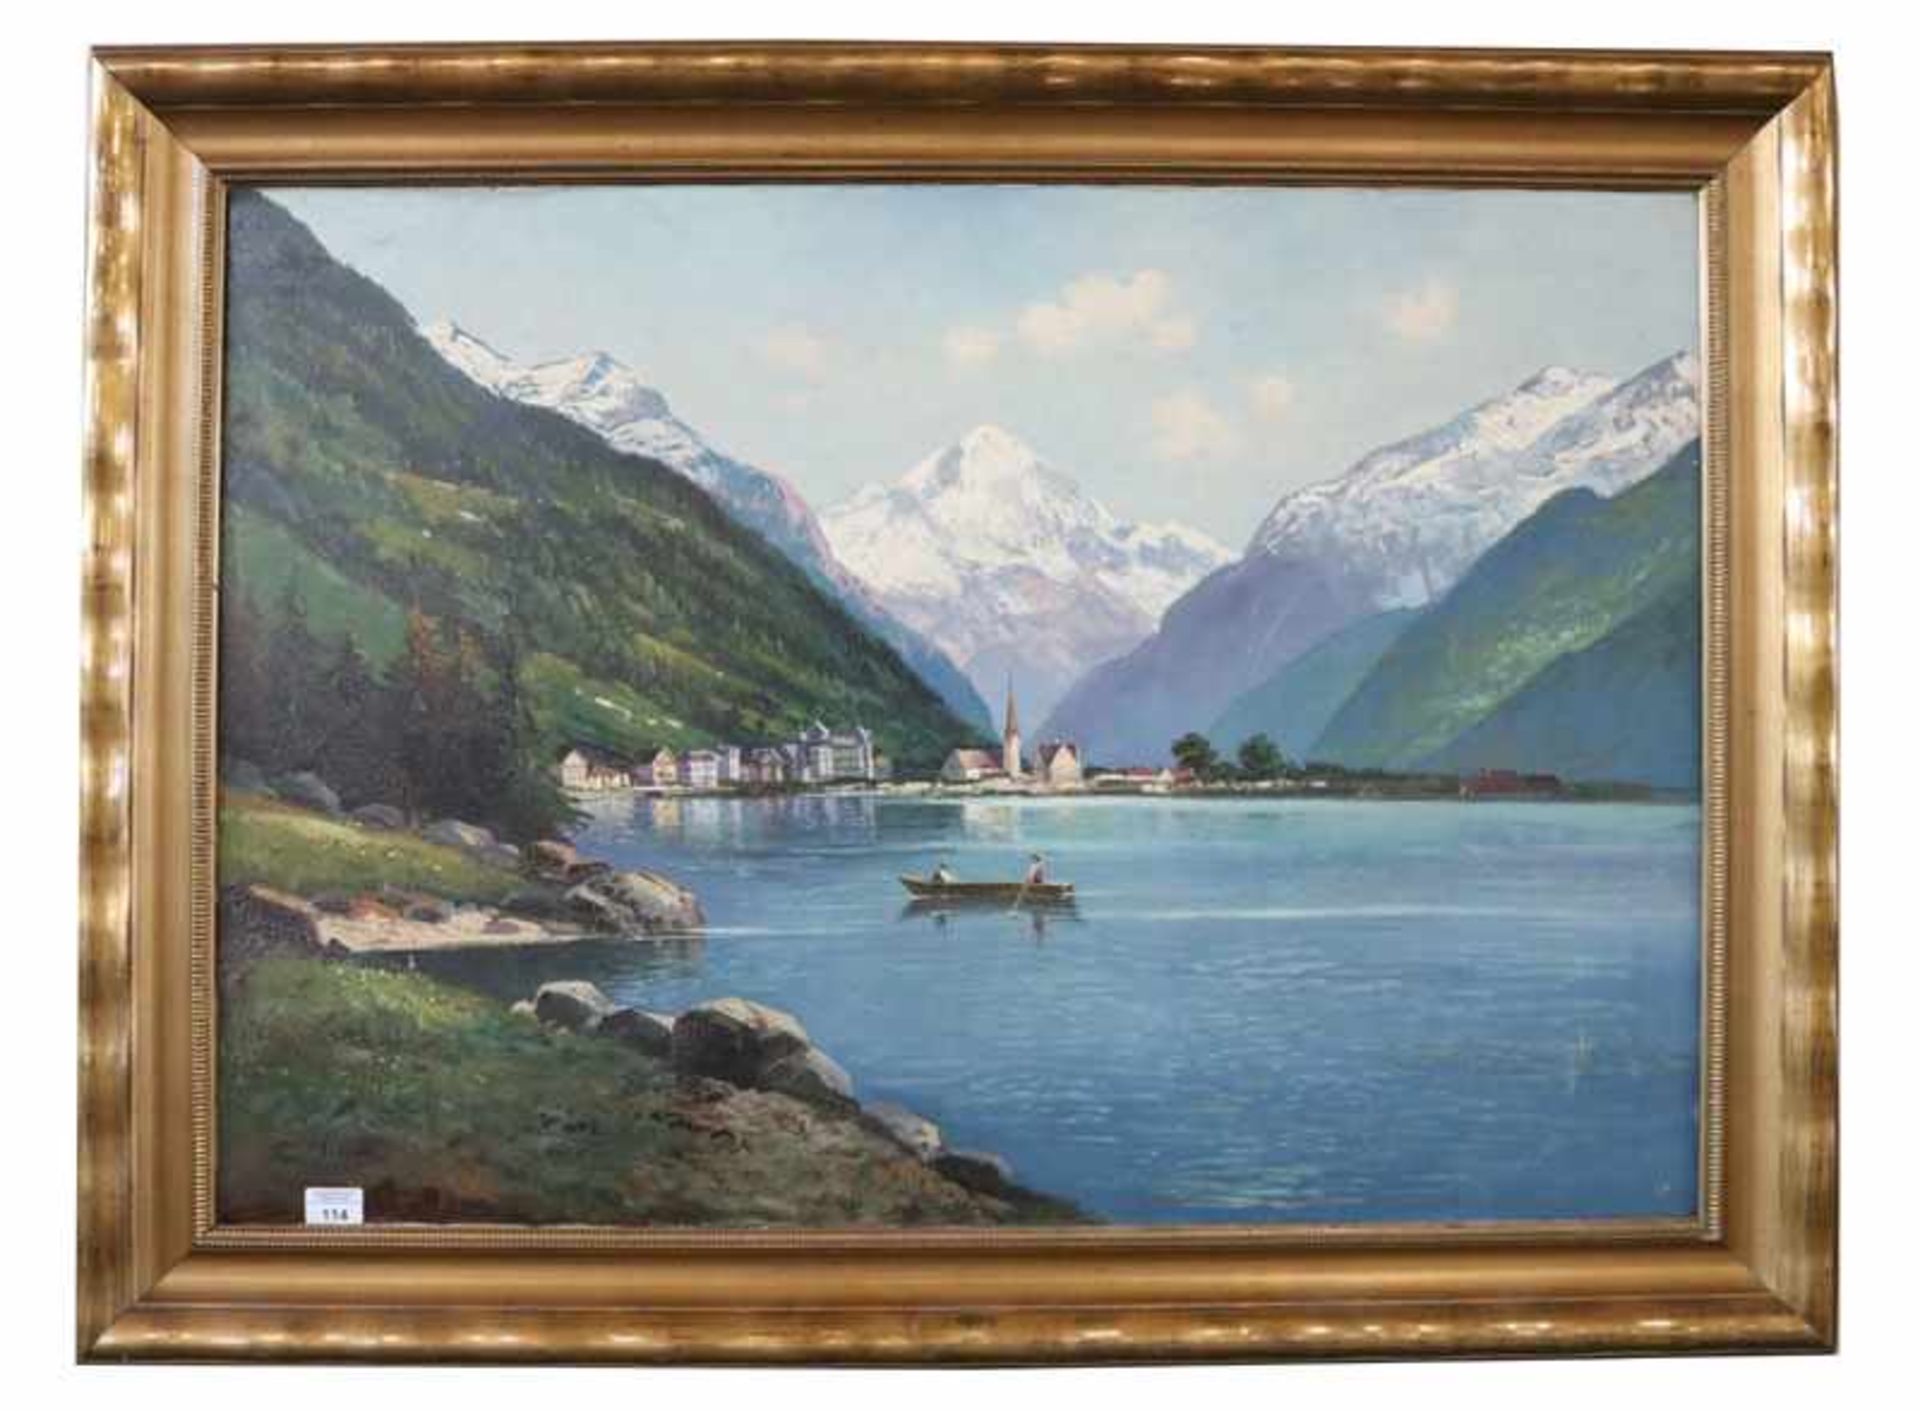 Gemälde ÖL/LW 'Gebirgslandschaft mit Dorf am Seeufer', signiert C. Hiller ?, LW stark beschädigt und